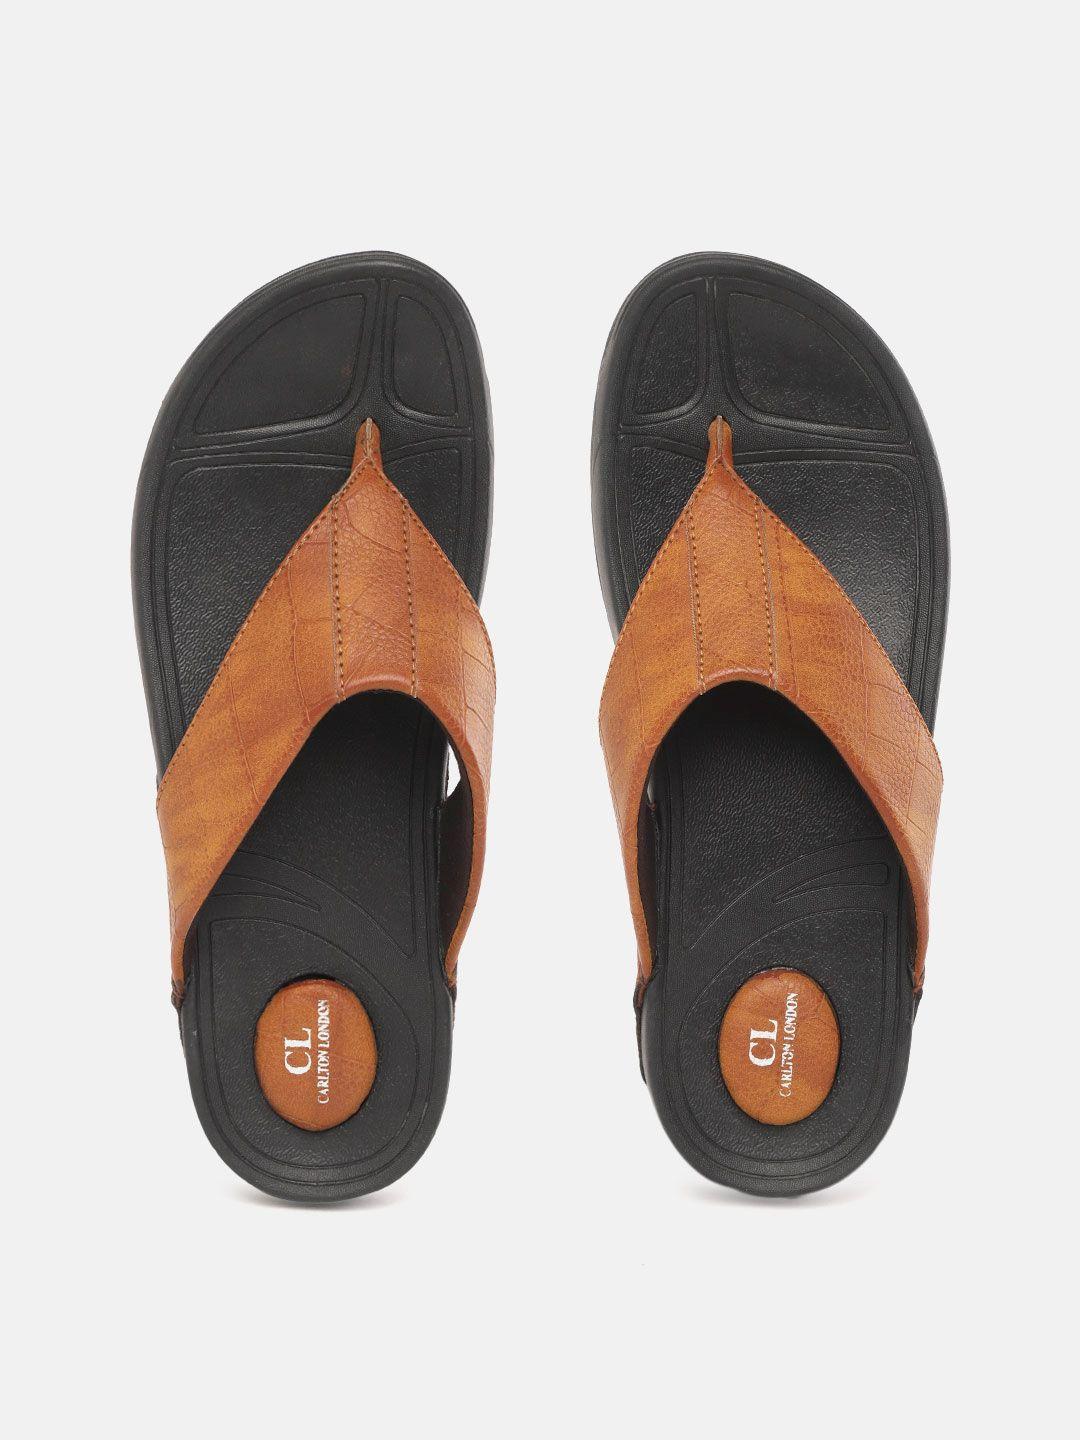 carlton-london-men-tan-brown-croc-textured-comfort-sandals